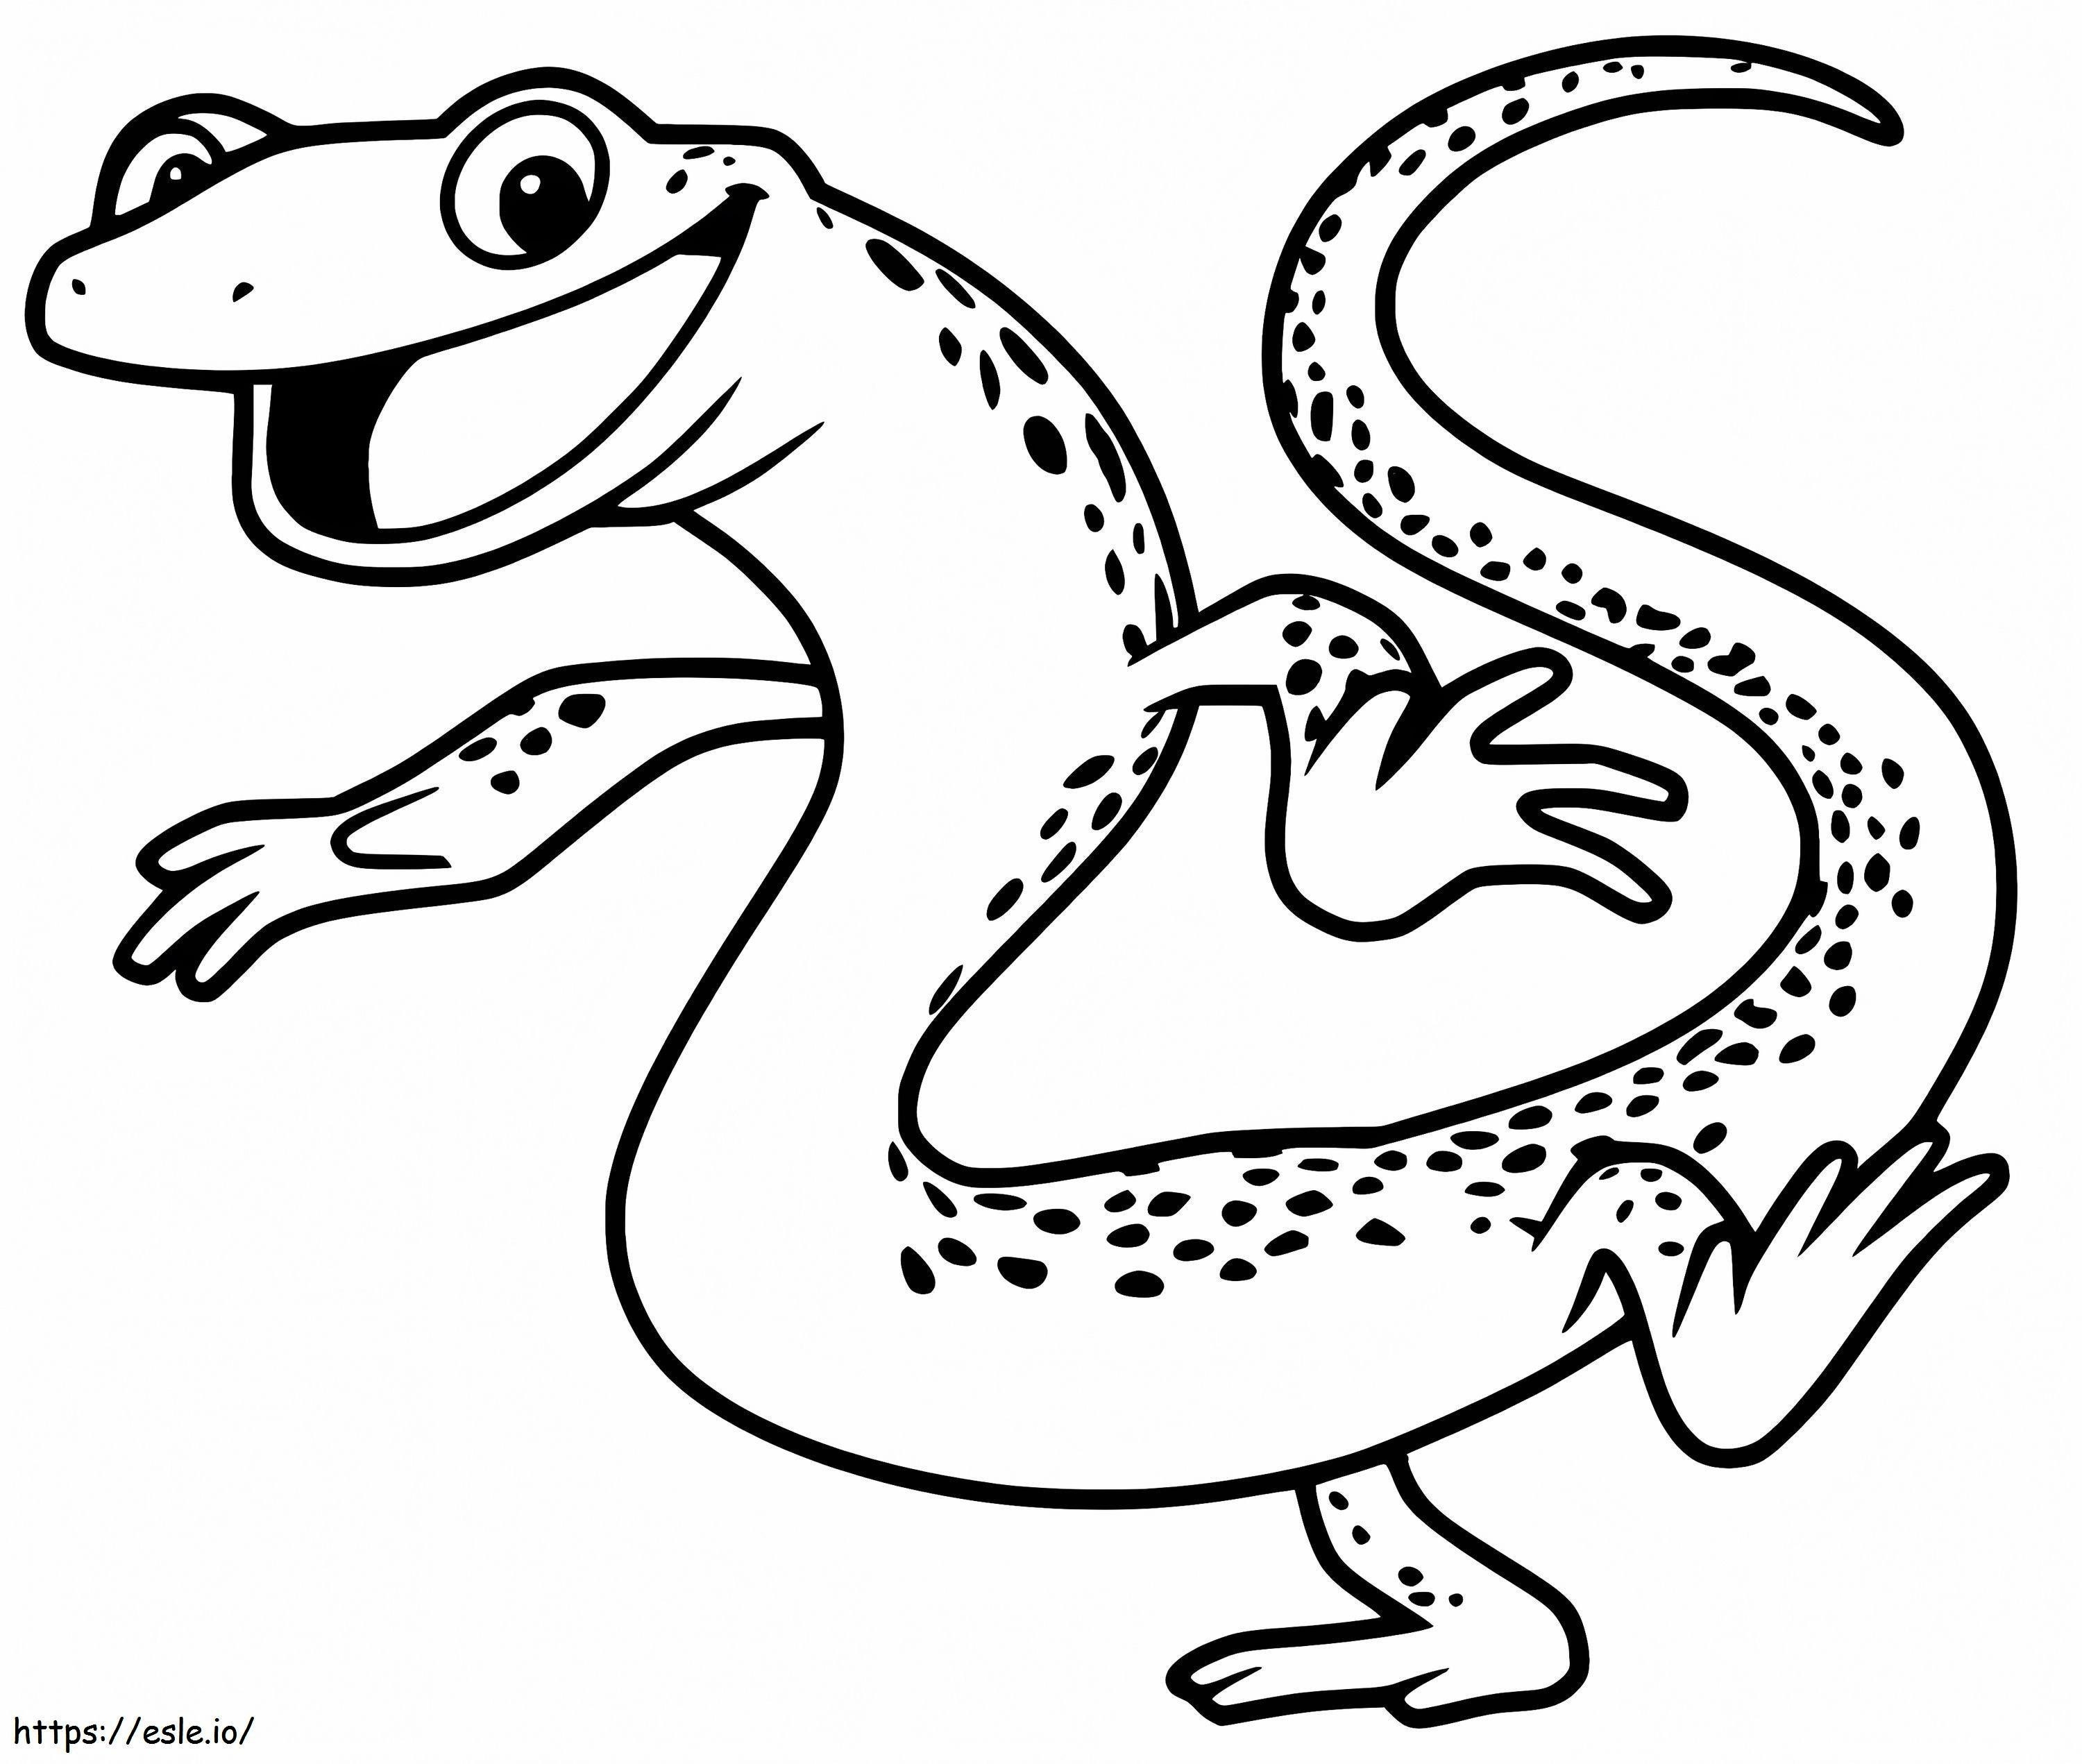 Salamandra de dibujos animados para colorear